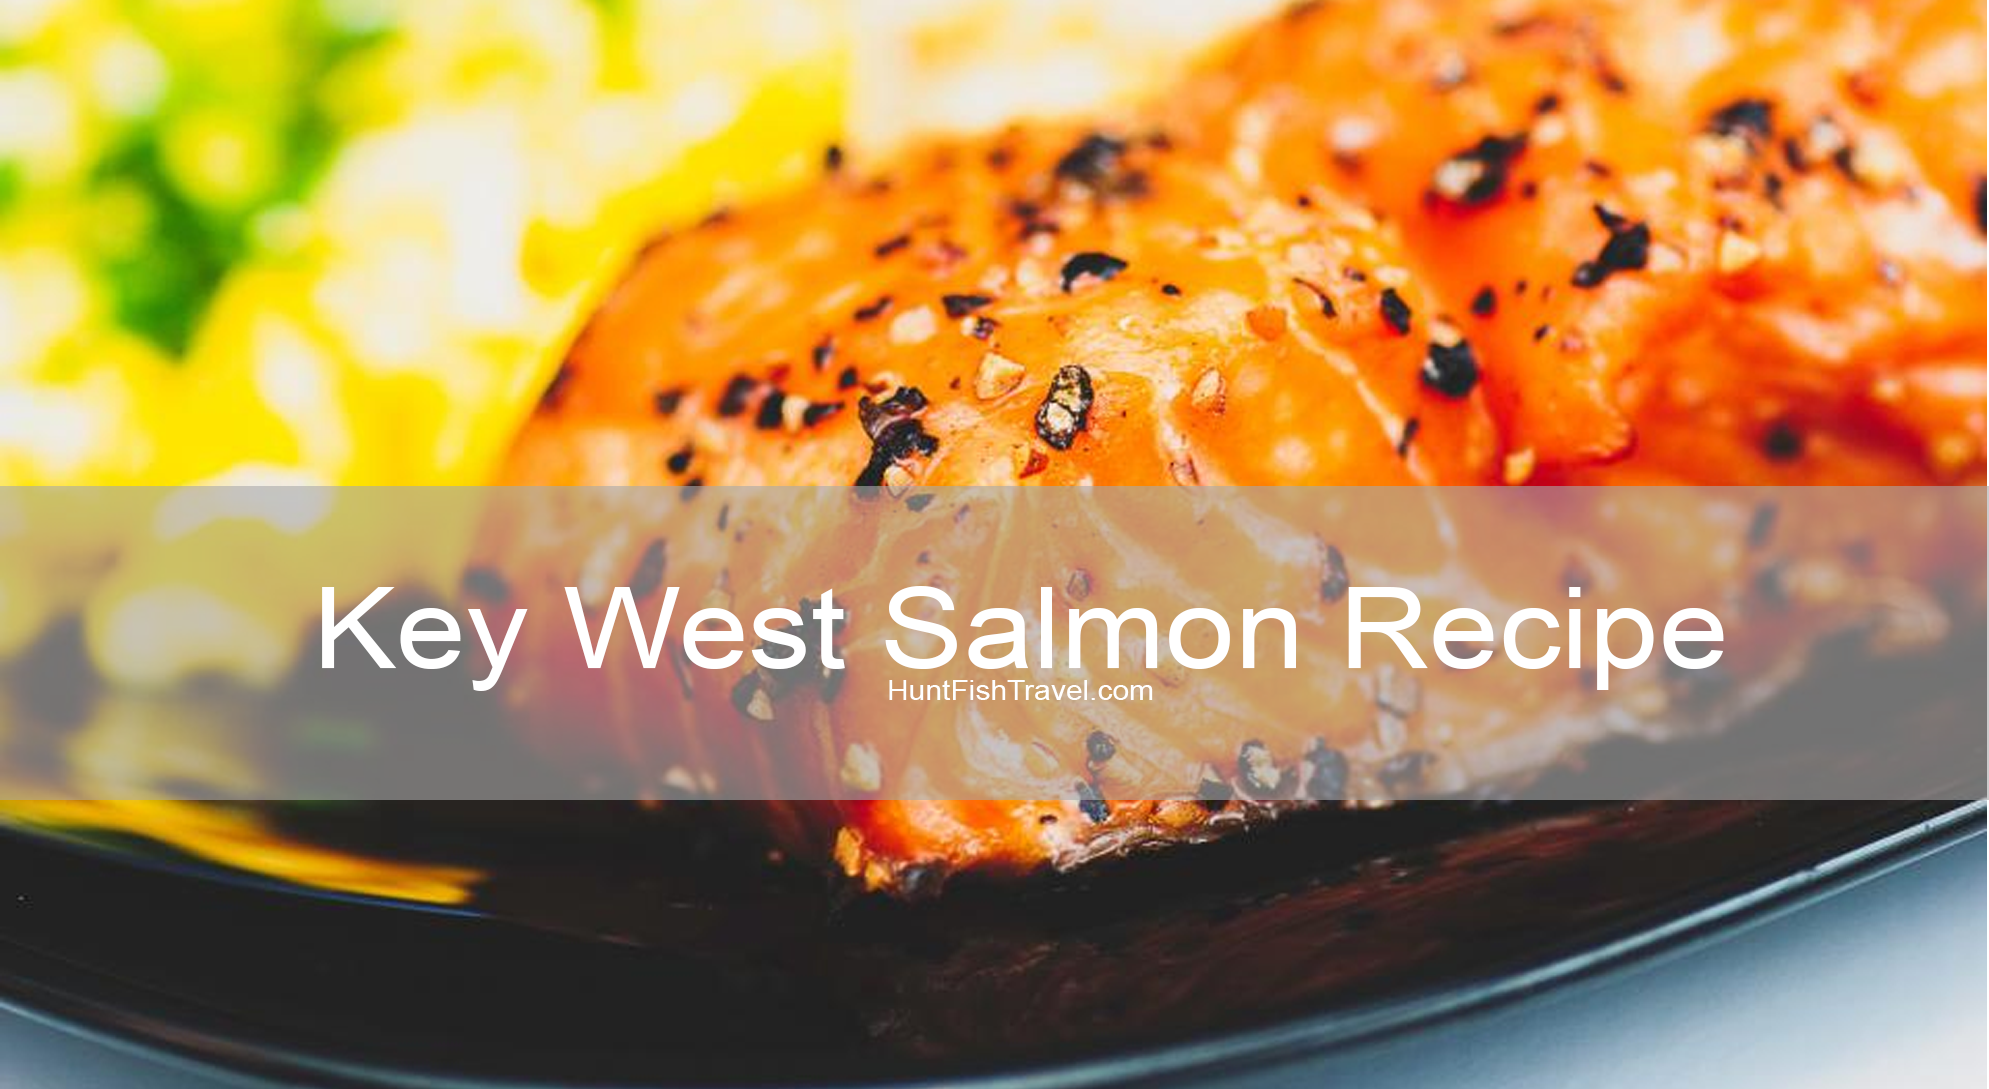 Recipe: Grilled Key West Salmon